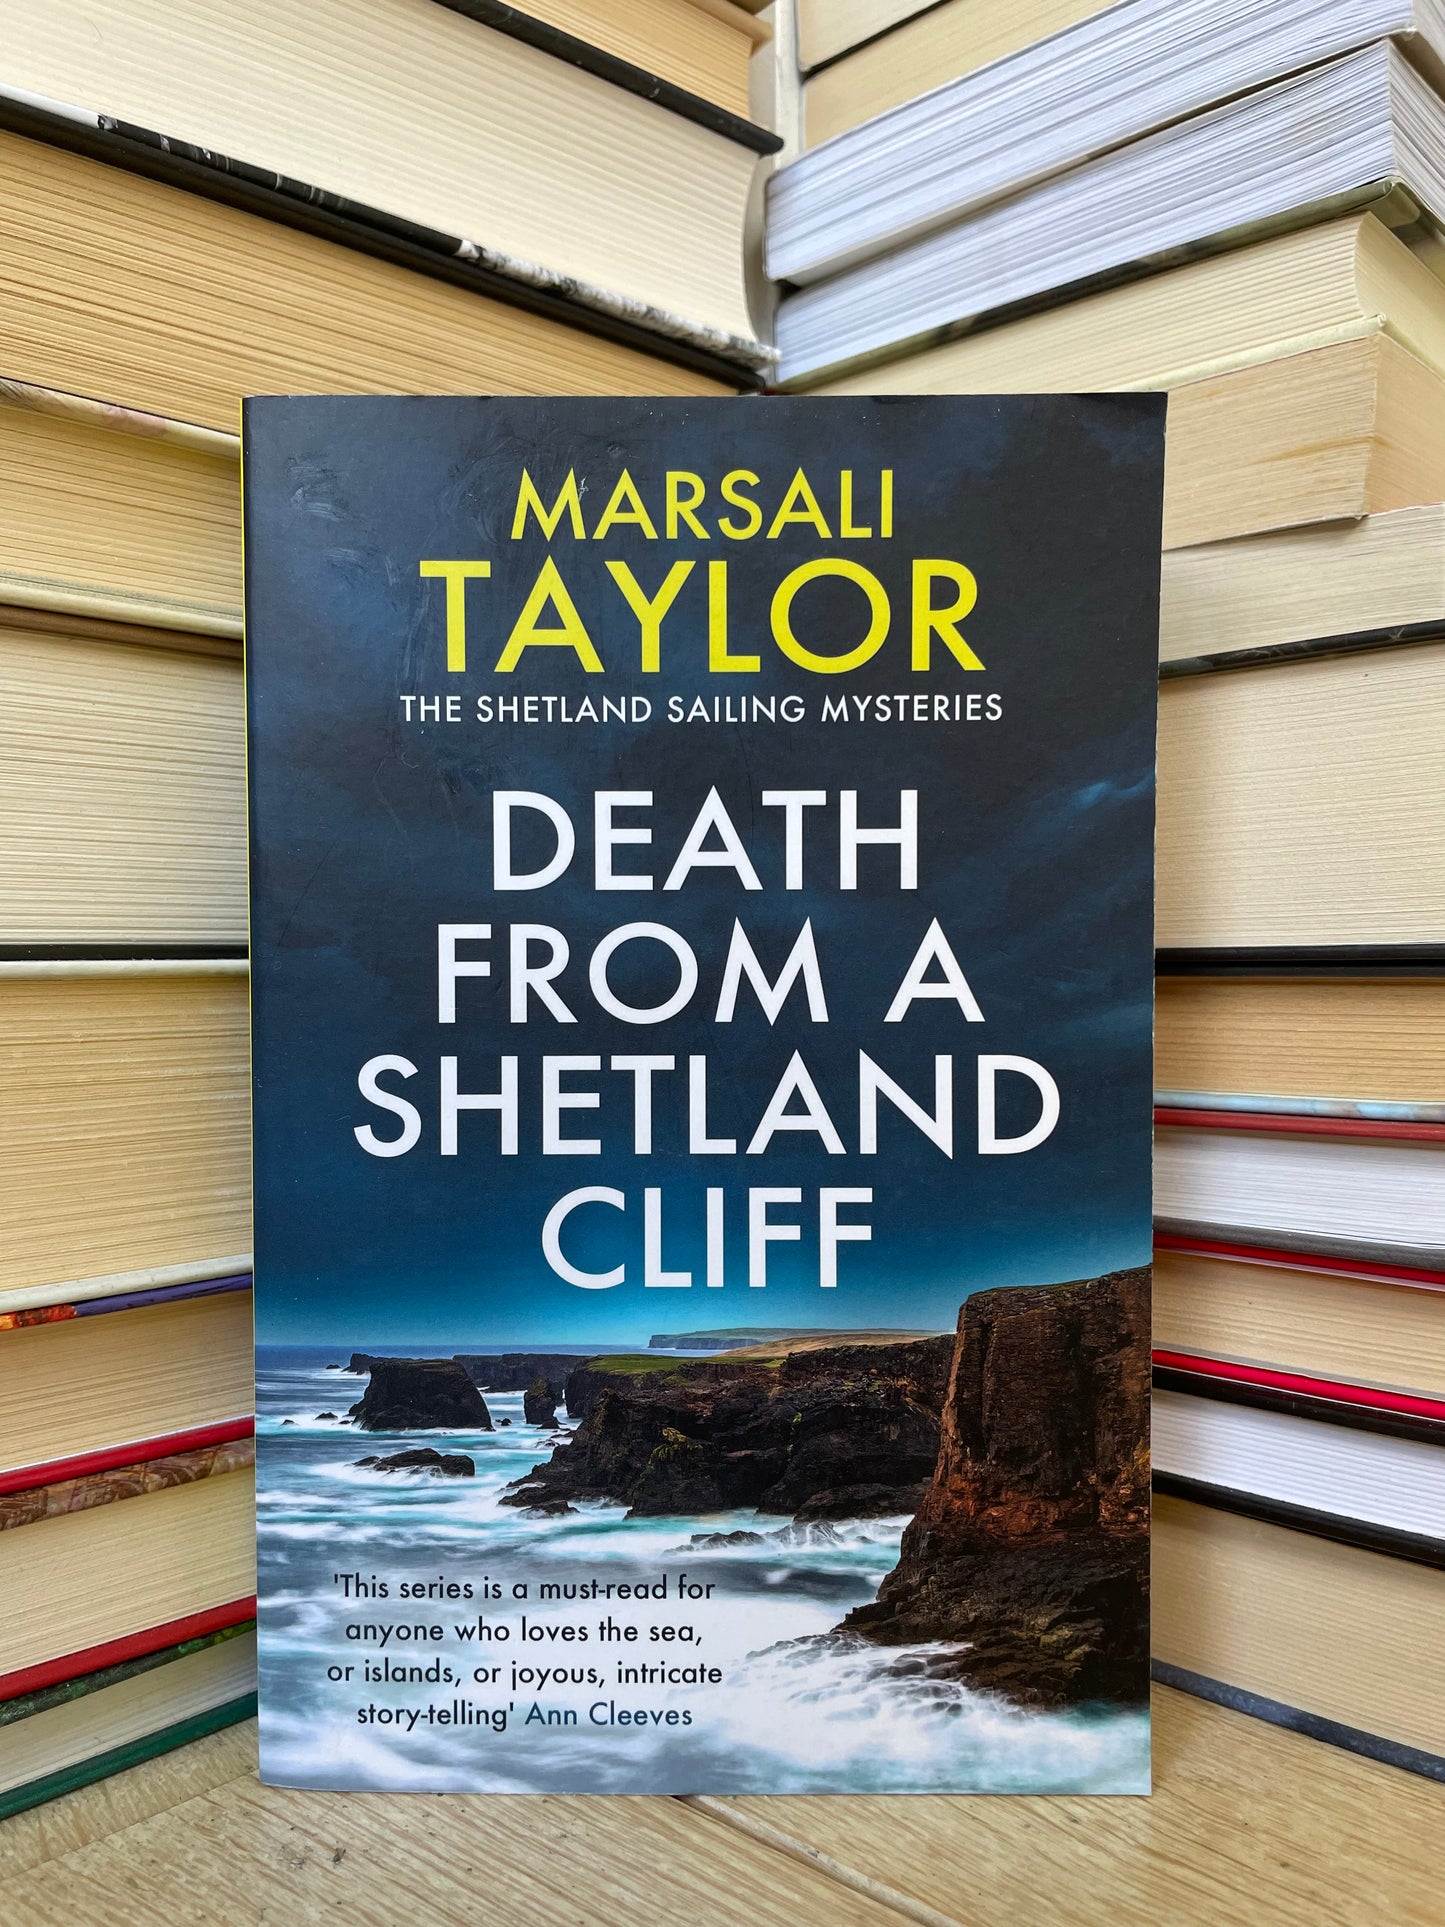 Marsali Taylor - Death From a Shetland Cliff